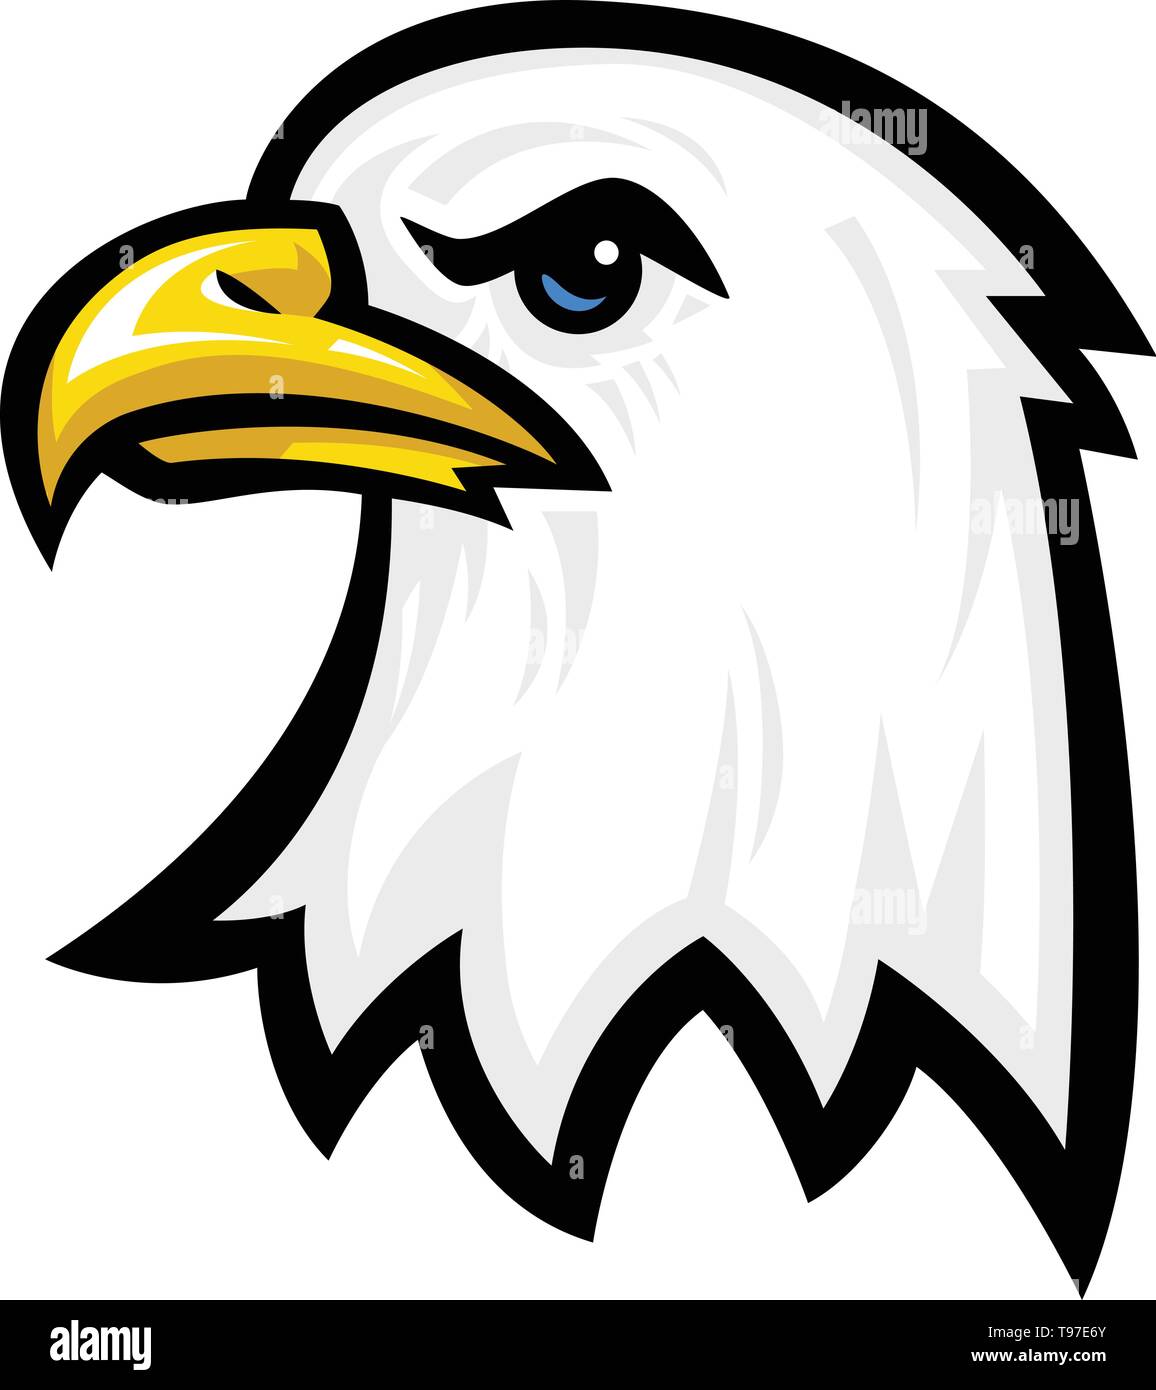 Águila de cabeza de dibujos animados Imagen Vector de stock - Alamy